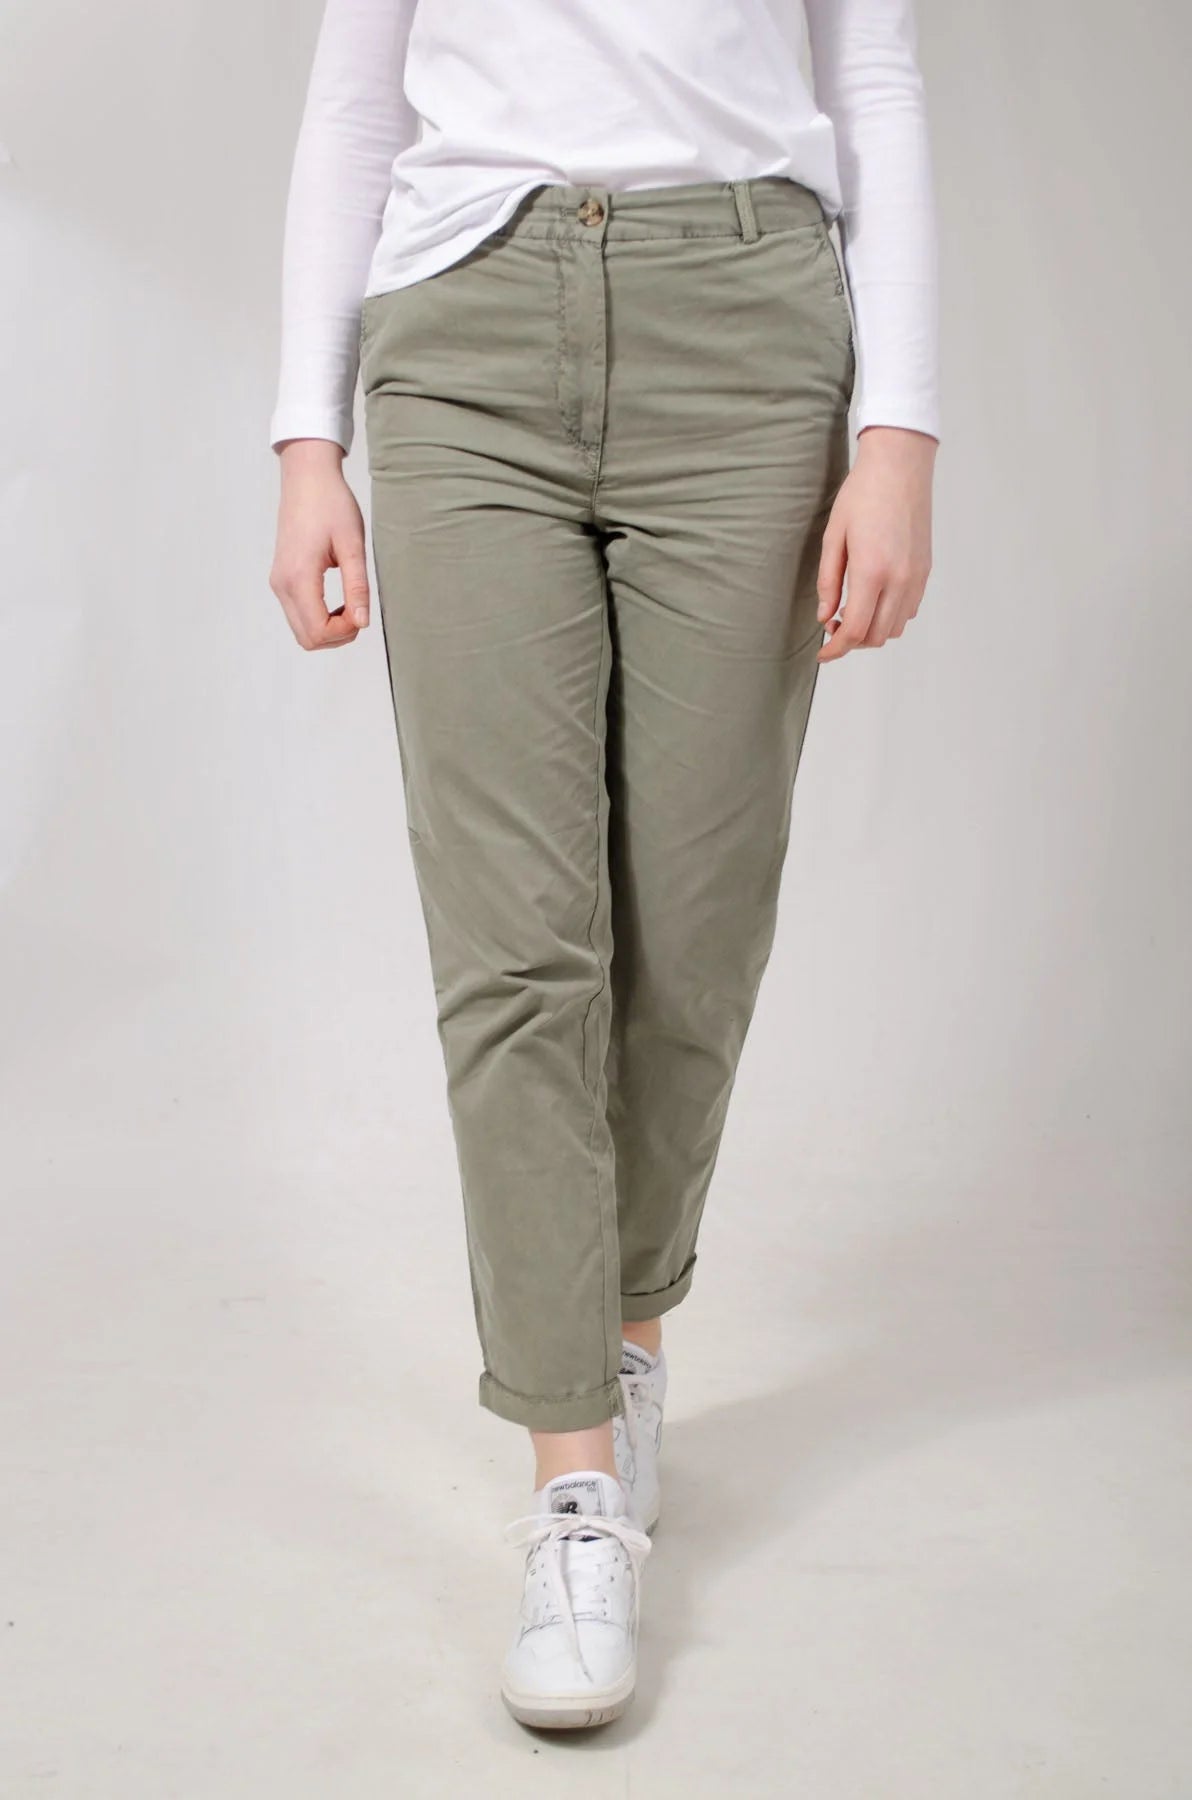 M&S Cotton Casual Chino Trousers Khaki Green / 12 / Reg